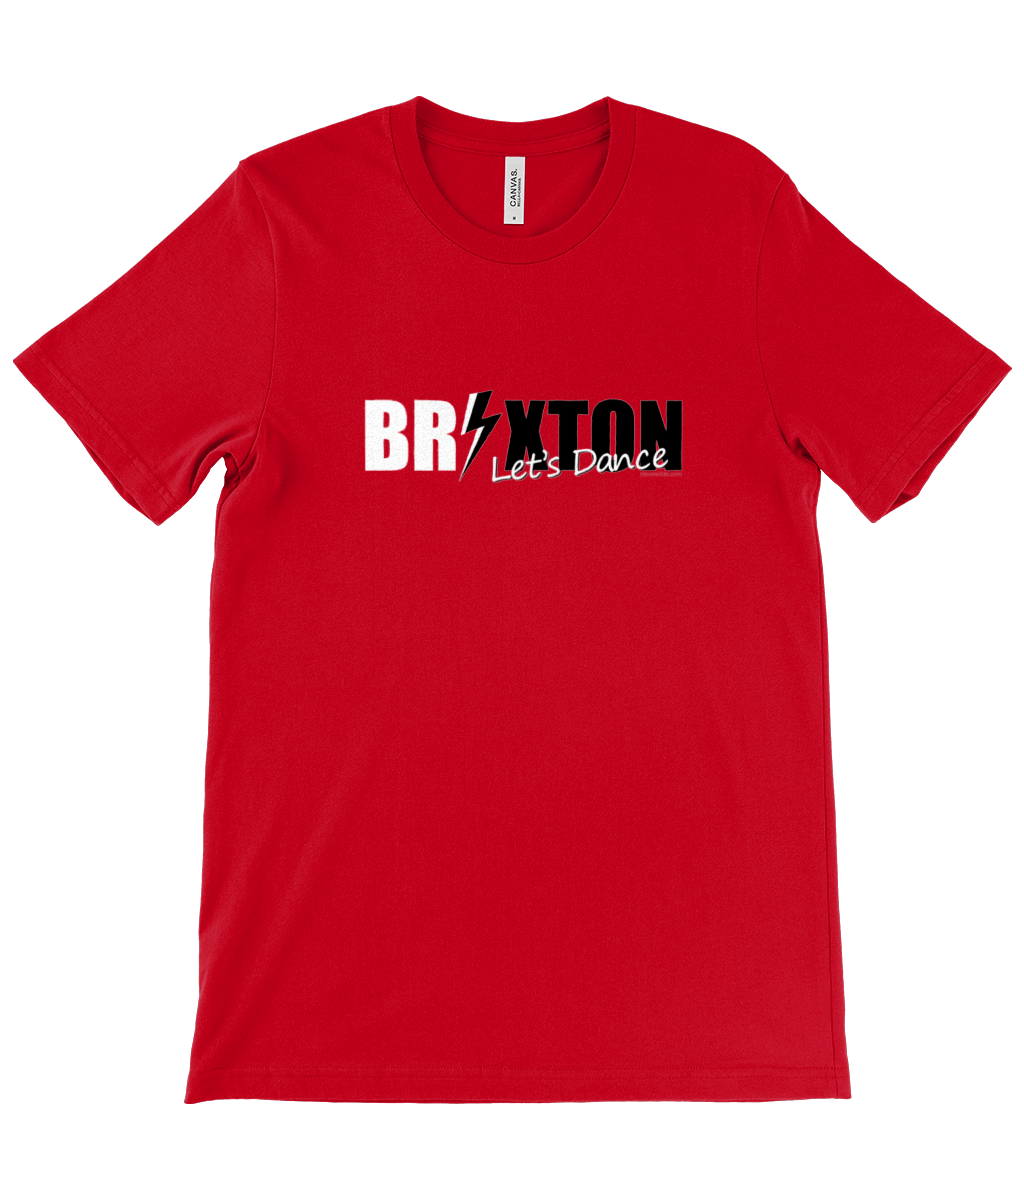 Let's Dance Brixton t-shirt red